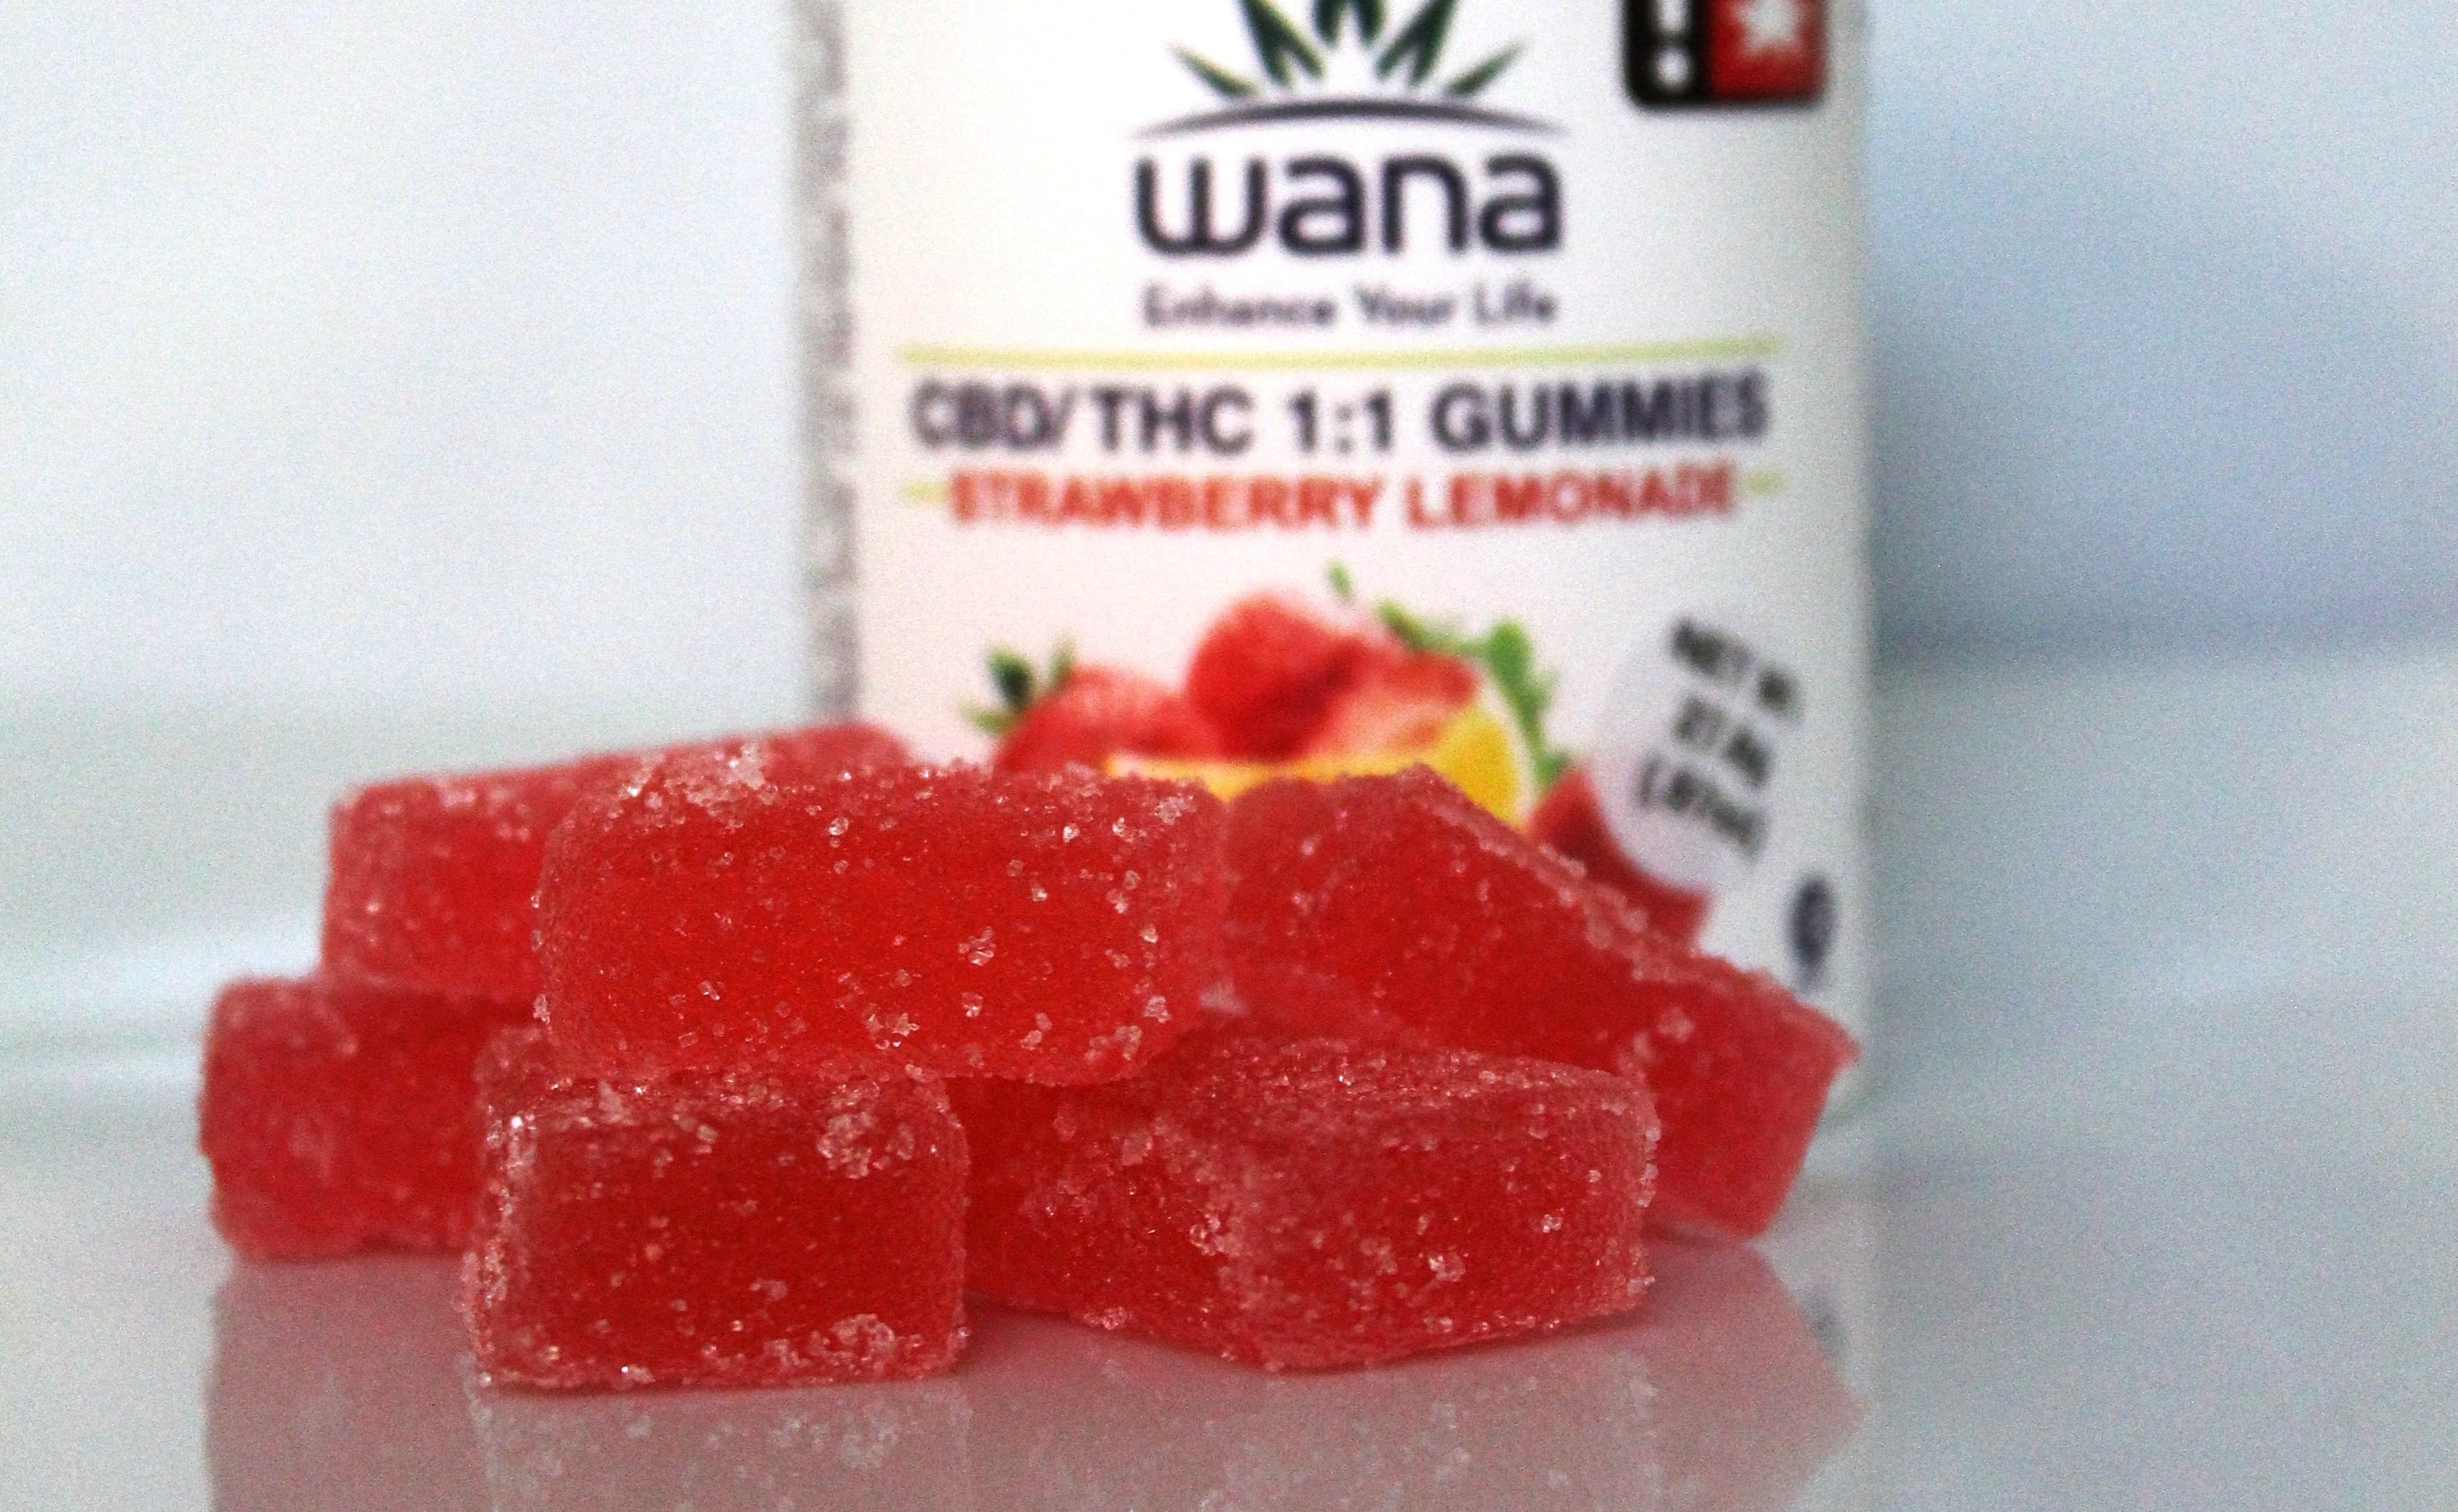 edible-strawberry-lemonade-11-gummies-50mg-thc-50mg-cbd-wana